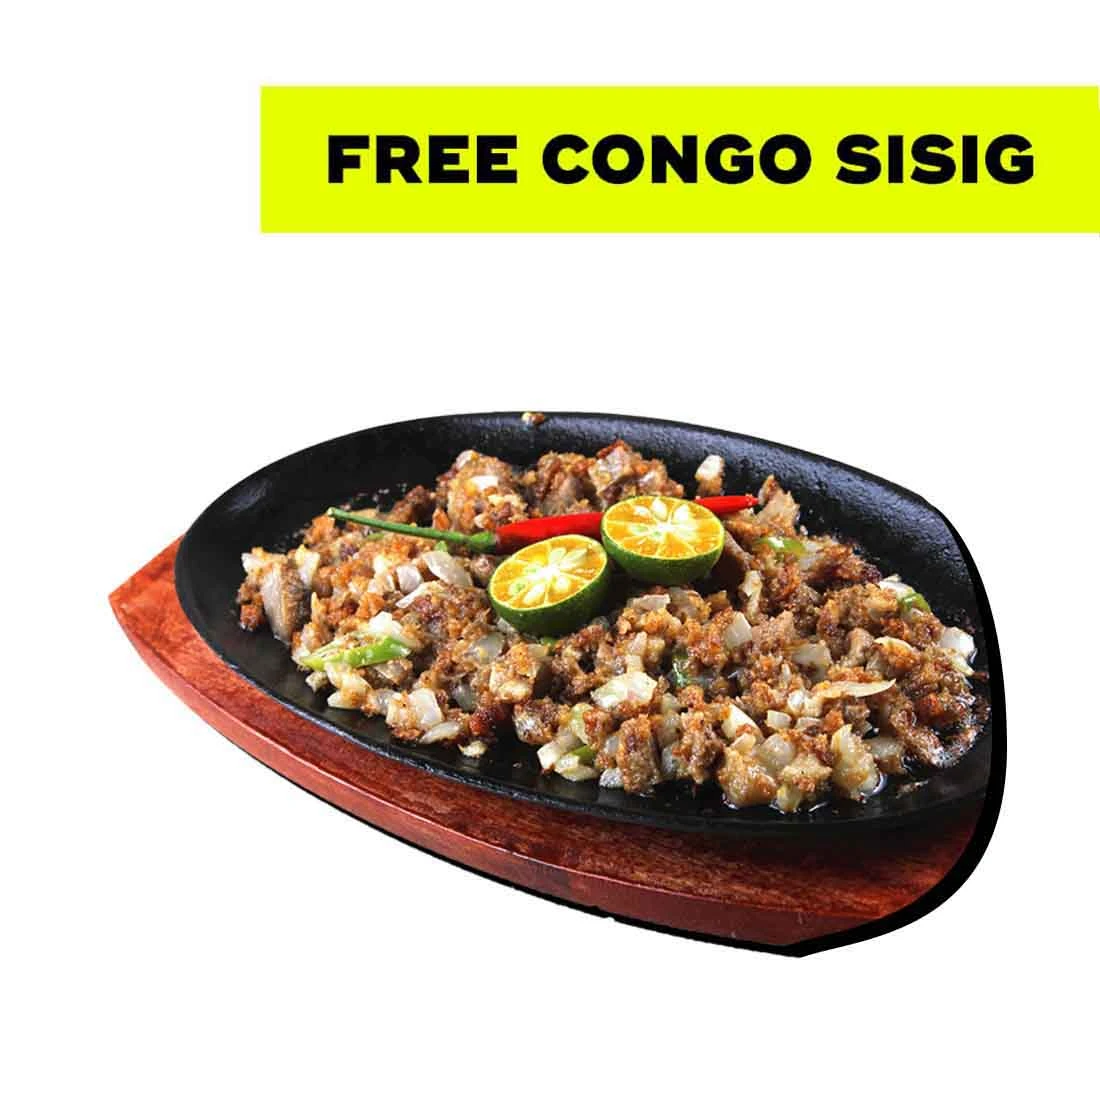 Free Congo Sisig